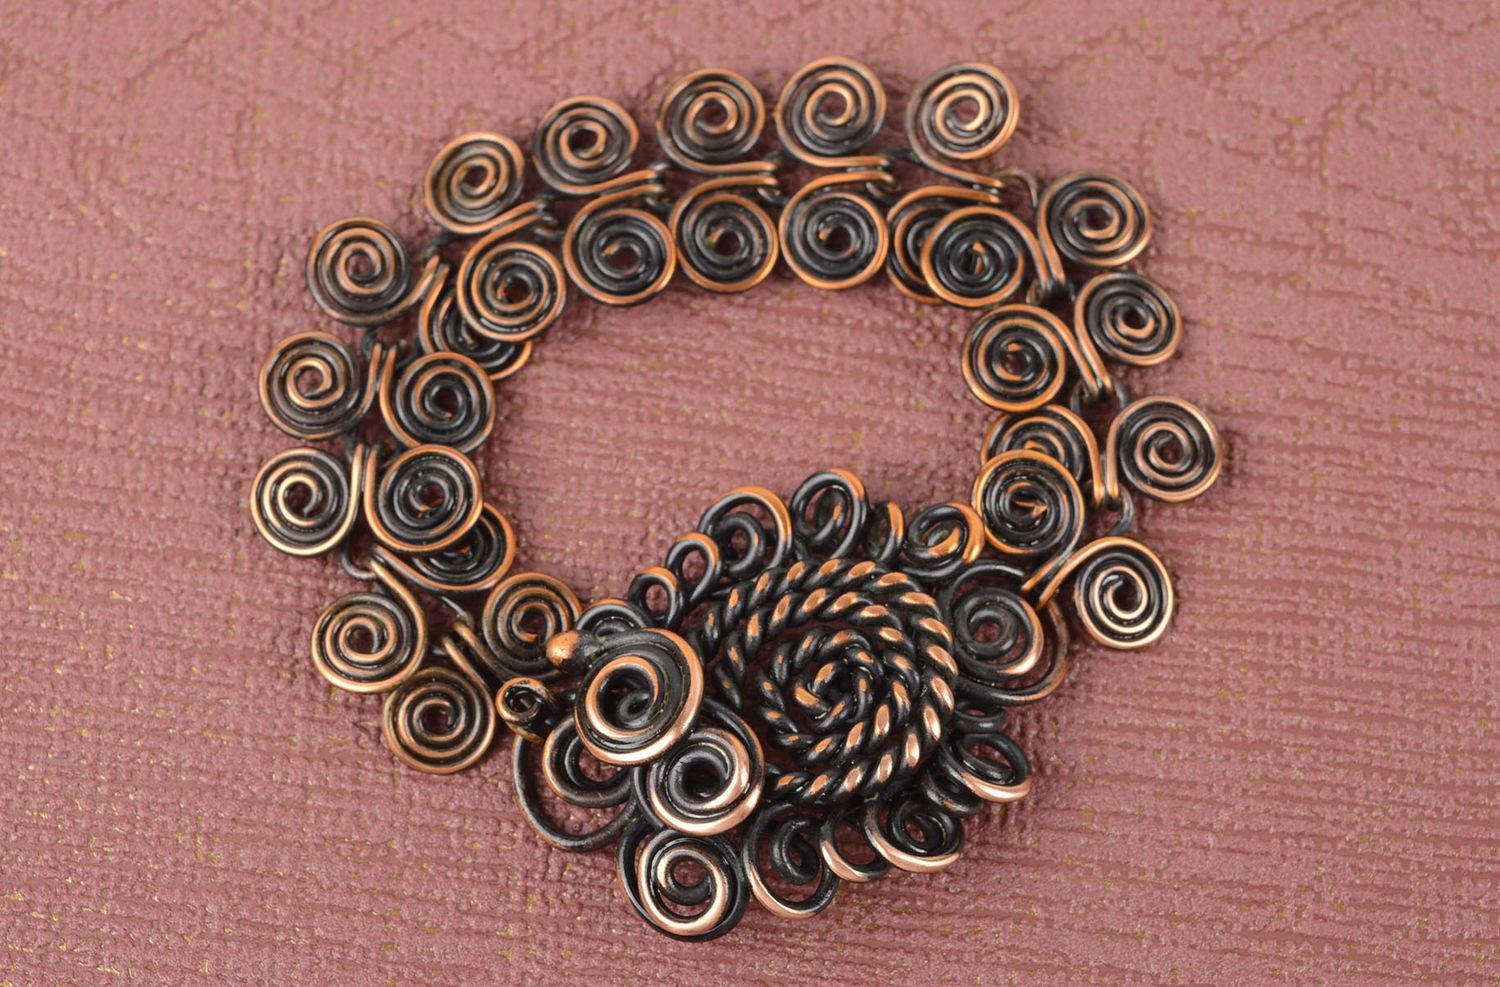 Handcrafted jewelry metal bracelet wrist bracelet designer jewelry gift for her photo 5